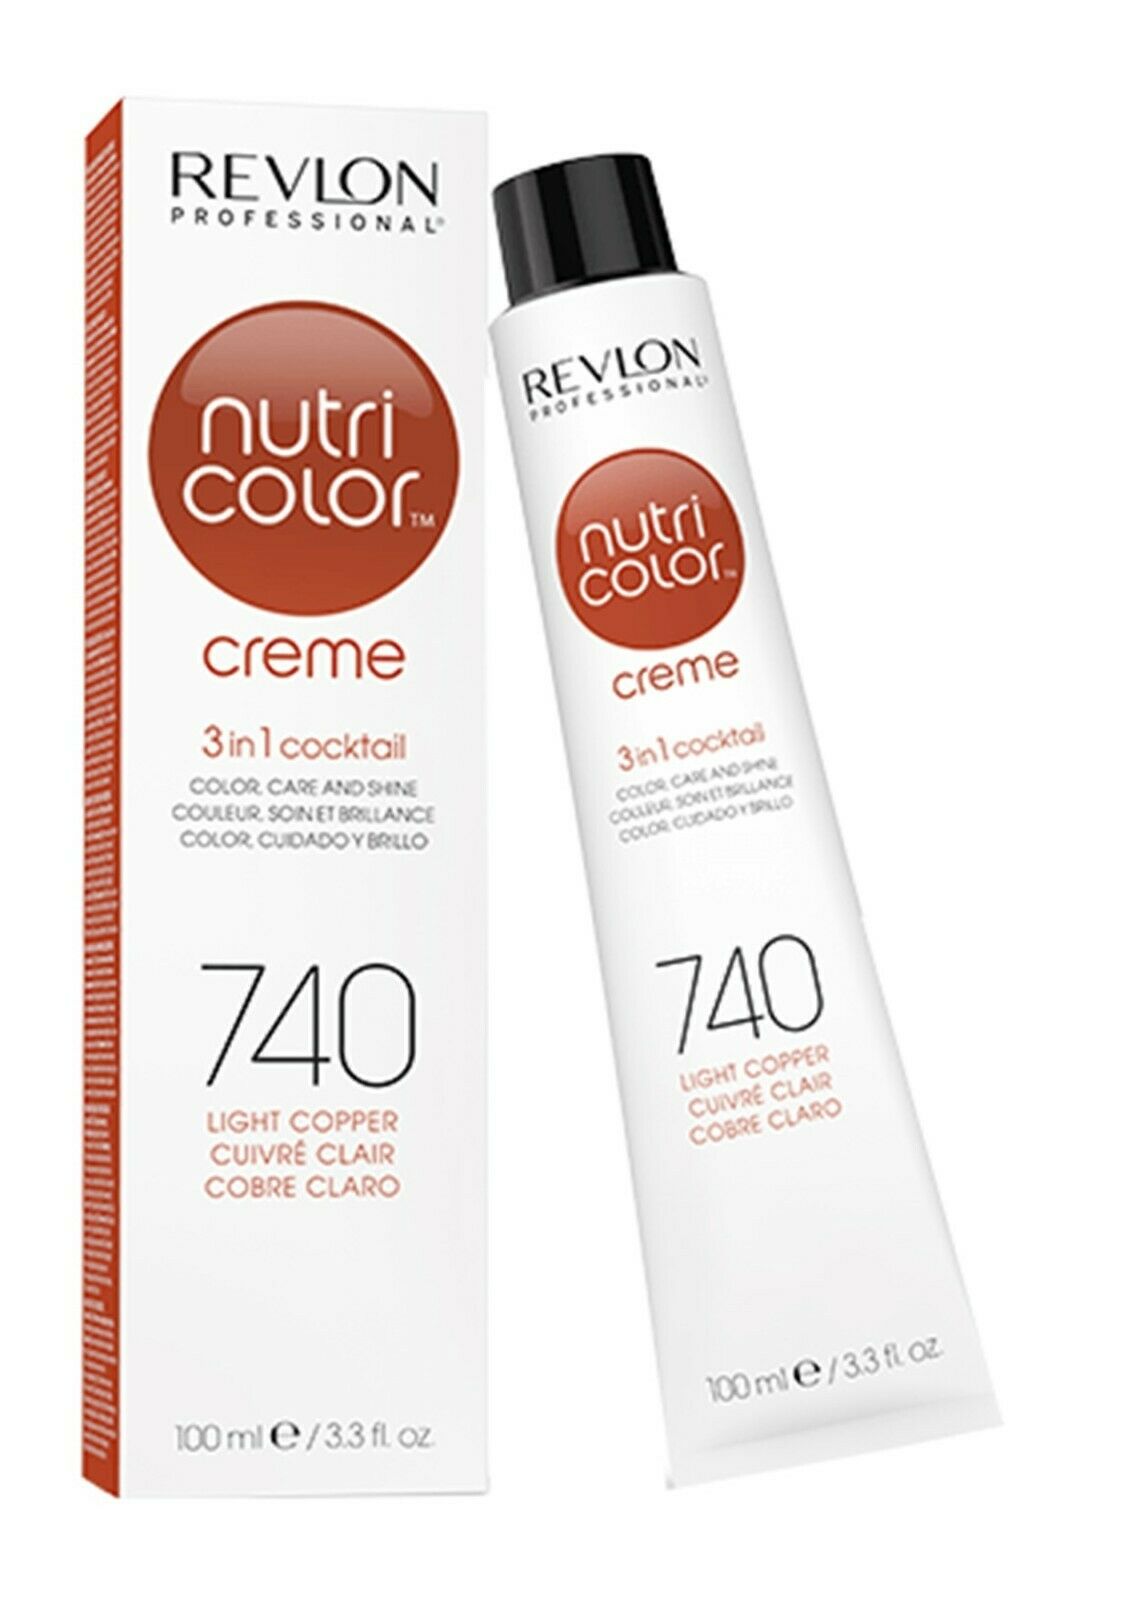 iaahhaircare,Revlon Professional Nutri Color Creme 3in1 #740 100ml,Hair Colouring,Revlon